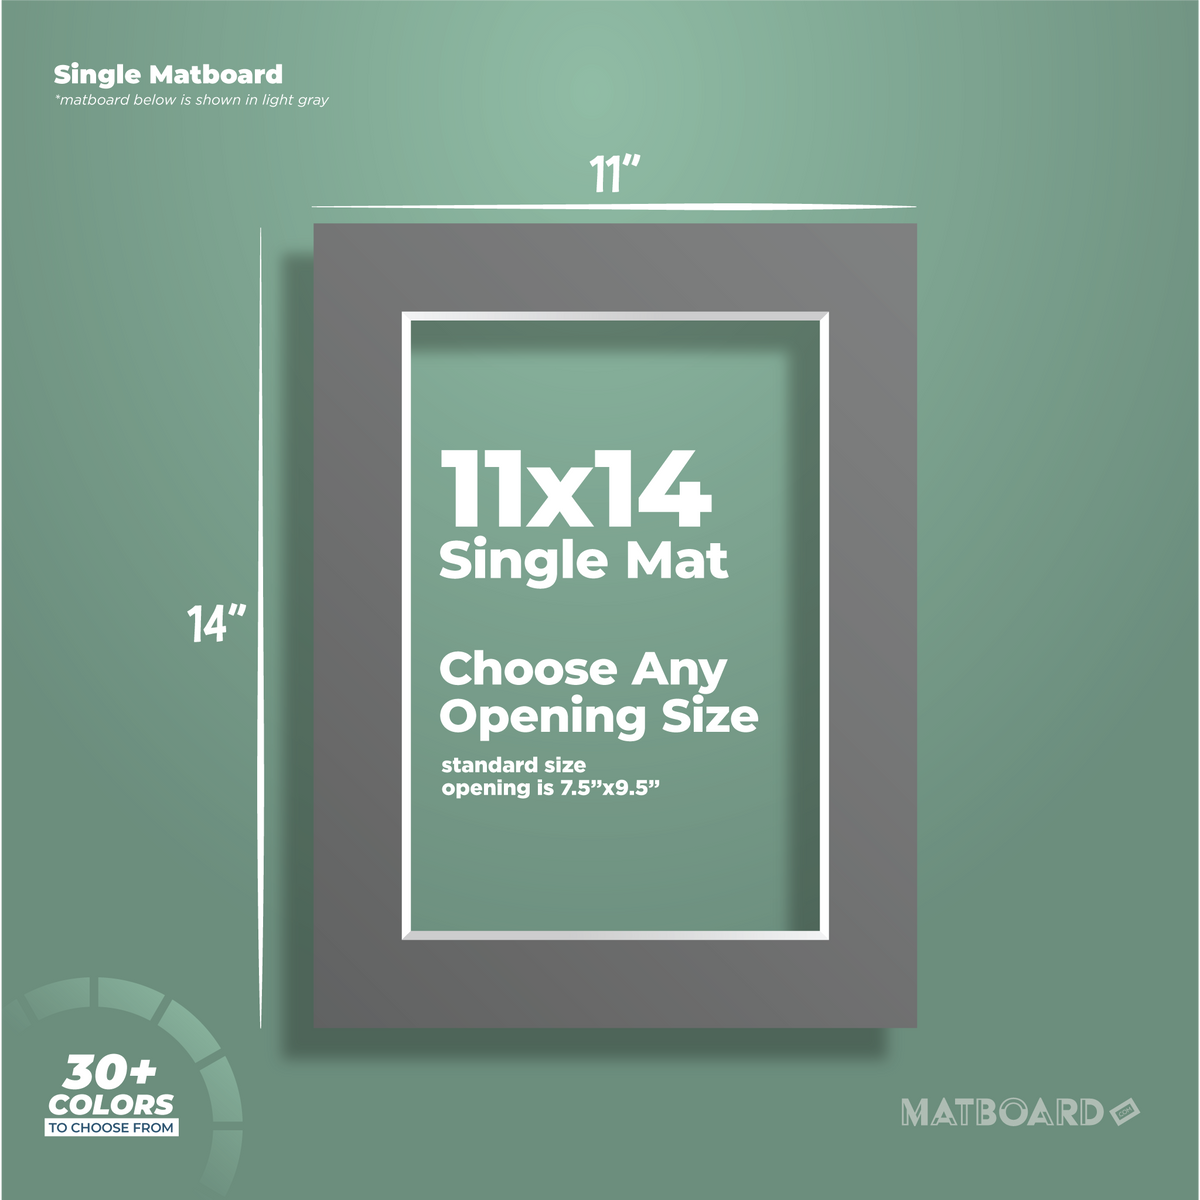 11x14 Premium Single Matboard – Matboarddotcom